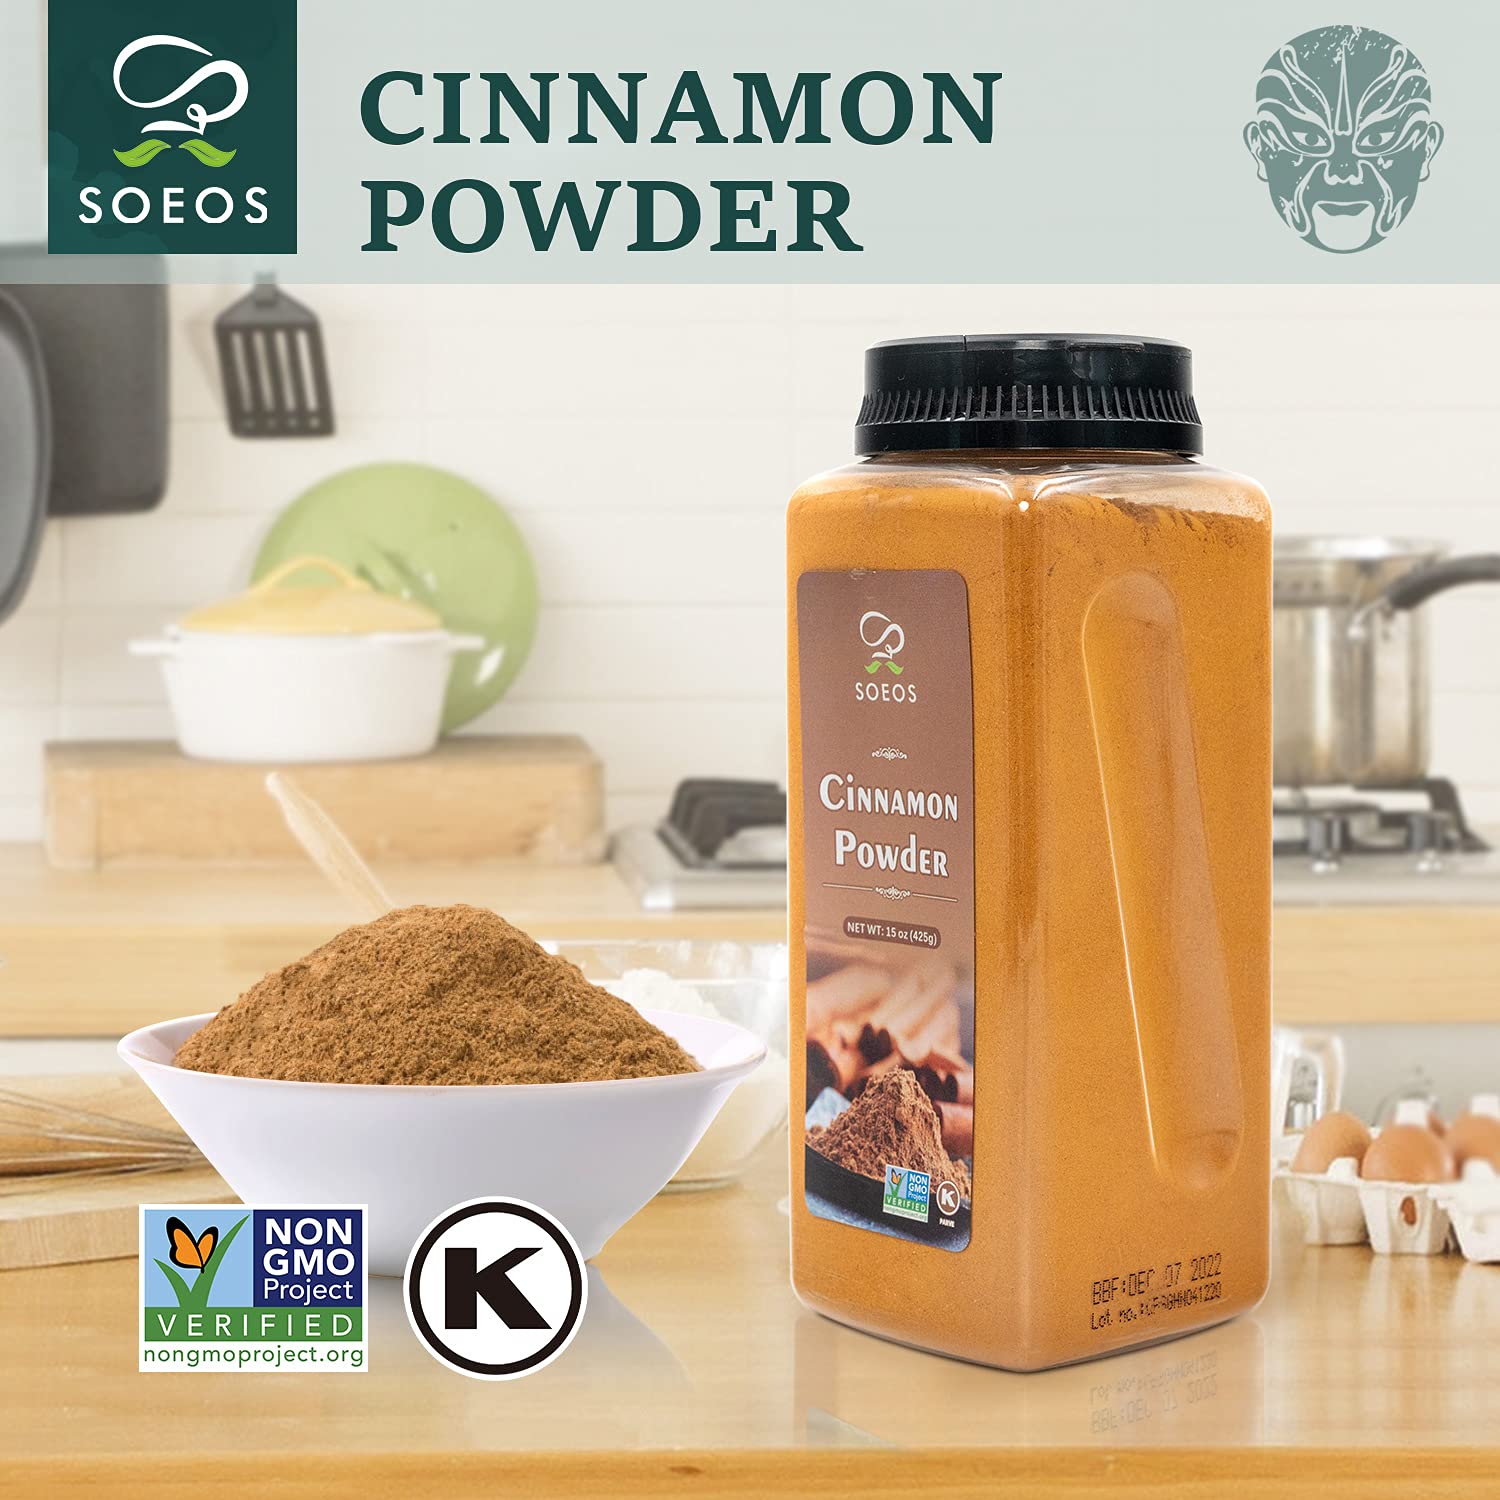 Ground Cinnamon Powder, 15oz